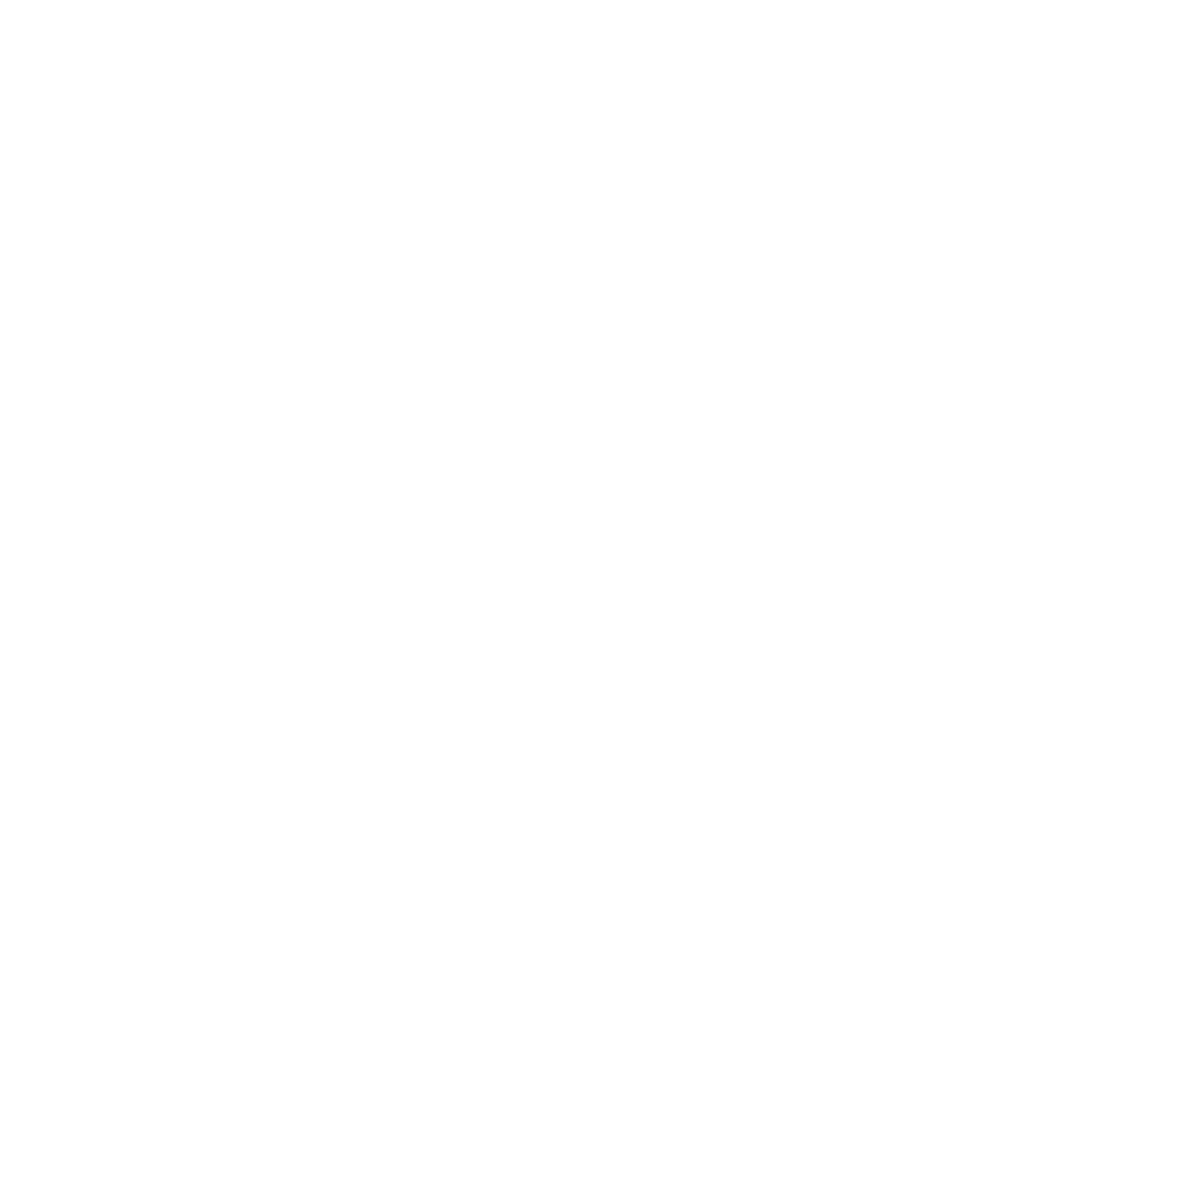 Kingsley Award